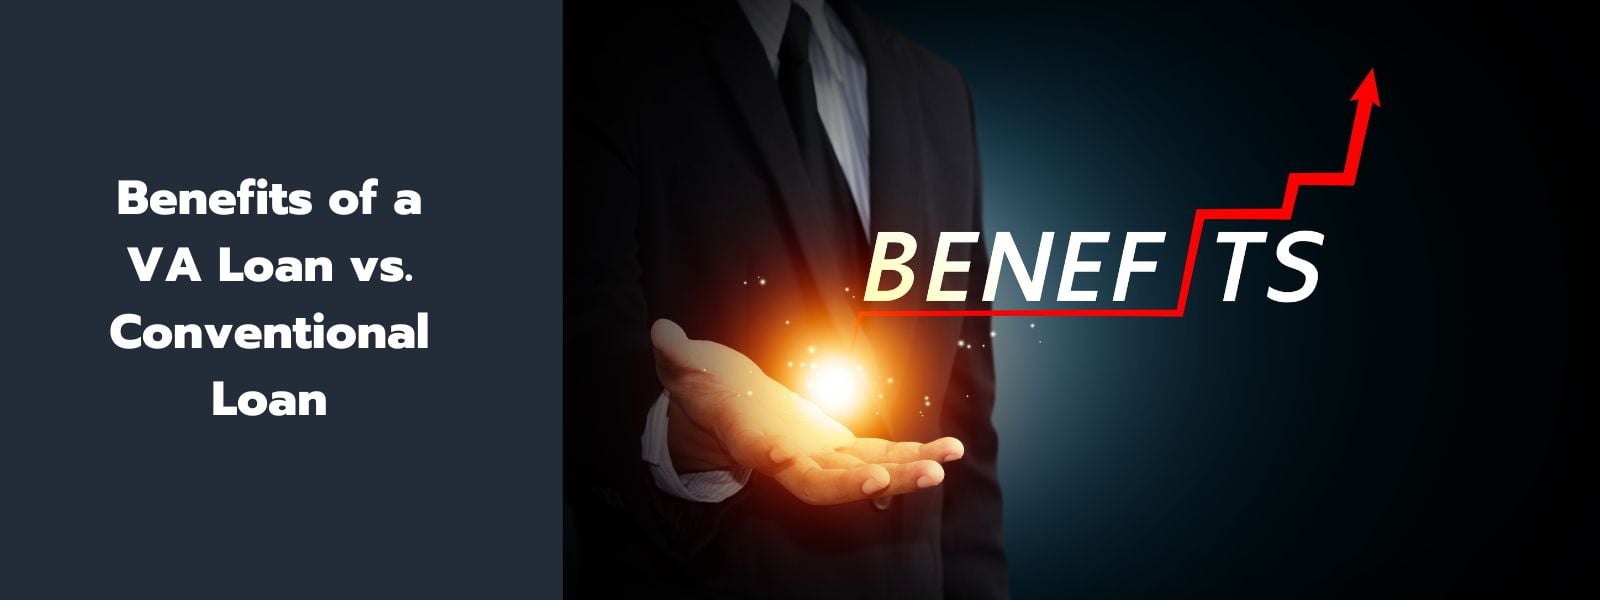 Benefits of a VA Loan vs. Conventional Loan